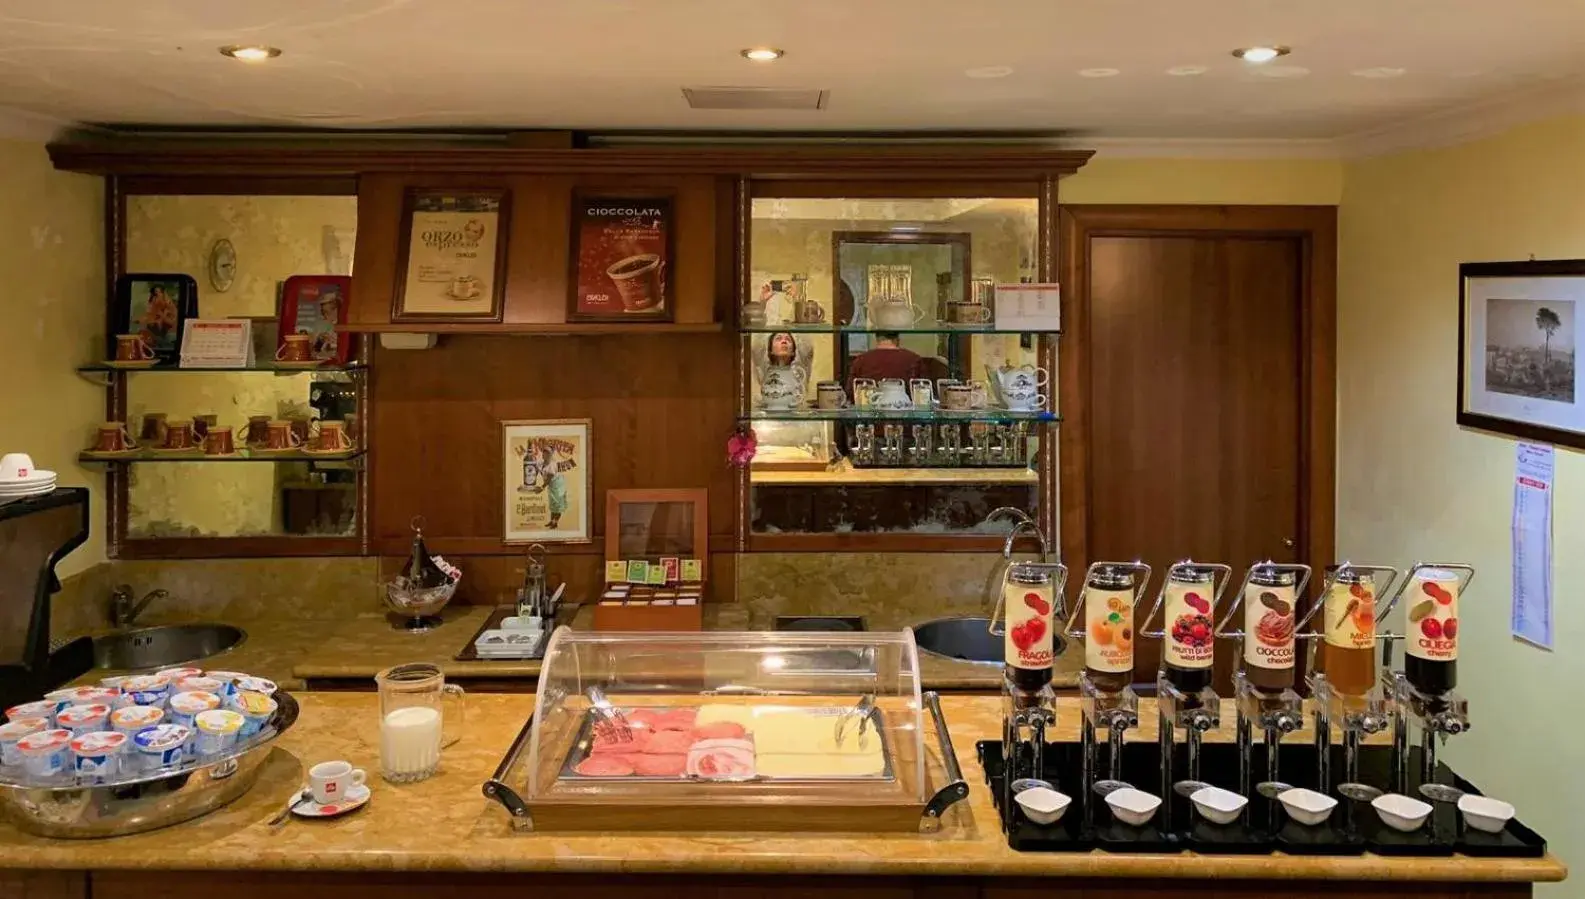 Continental breakfast in Stromboli Hotel